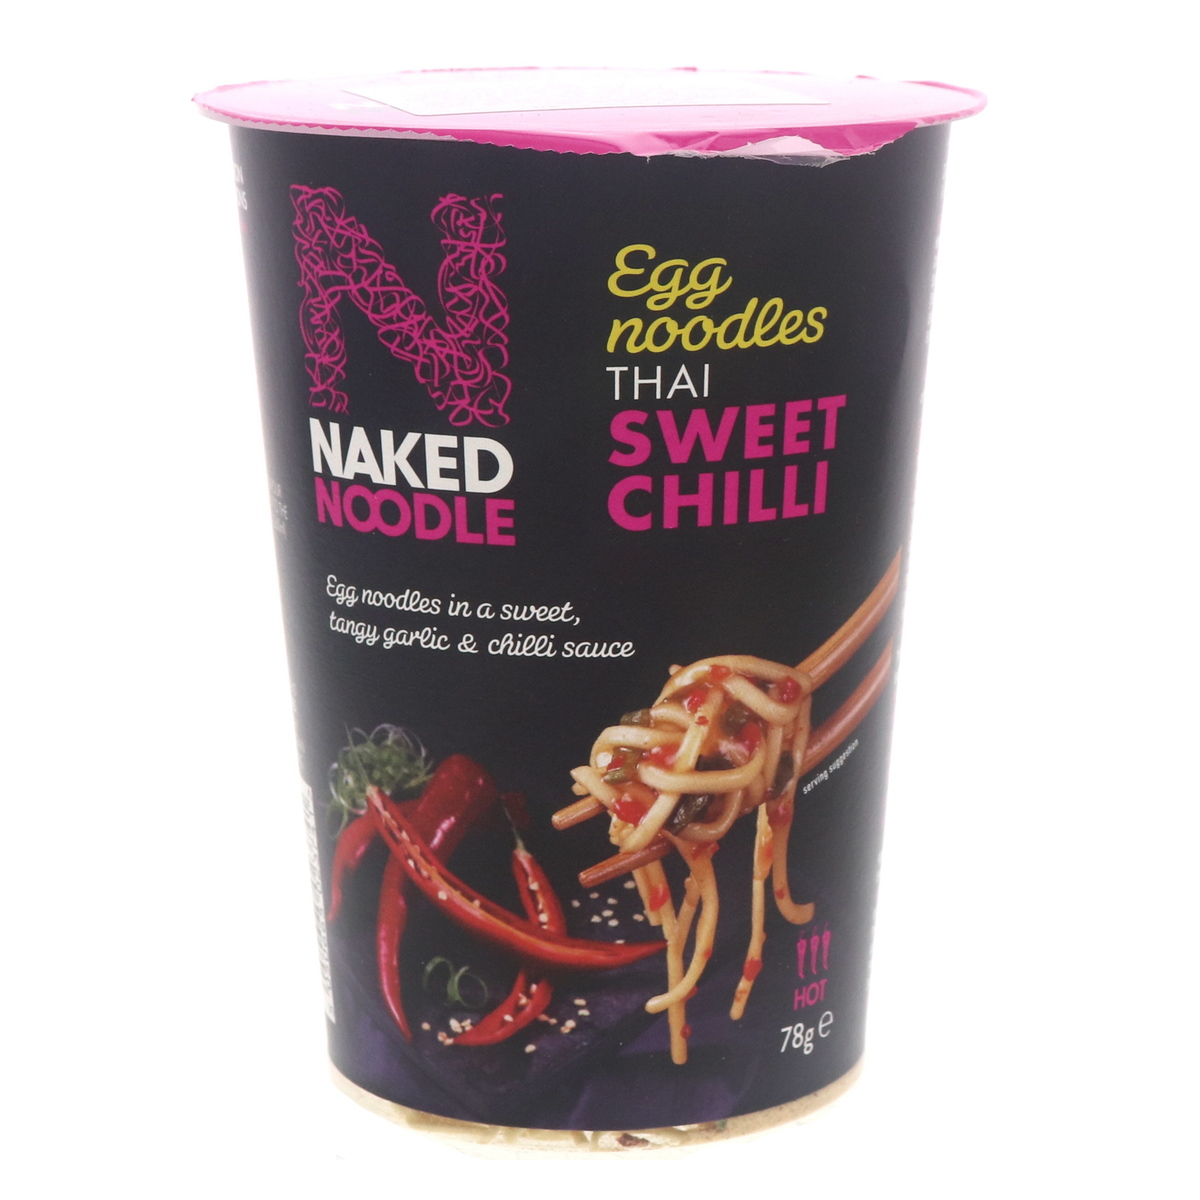 Naked Noodle Thai Sweet Chilli Egg Noodles 78g | Cup Noodle | Lulu Qatar